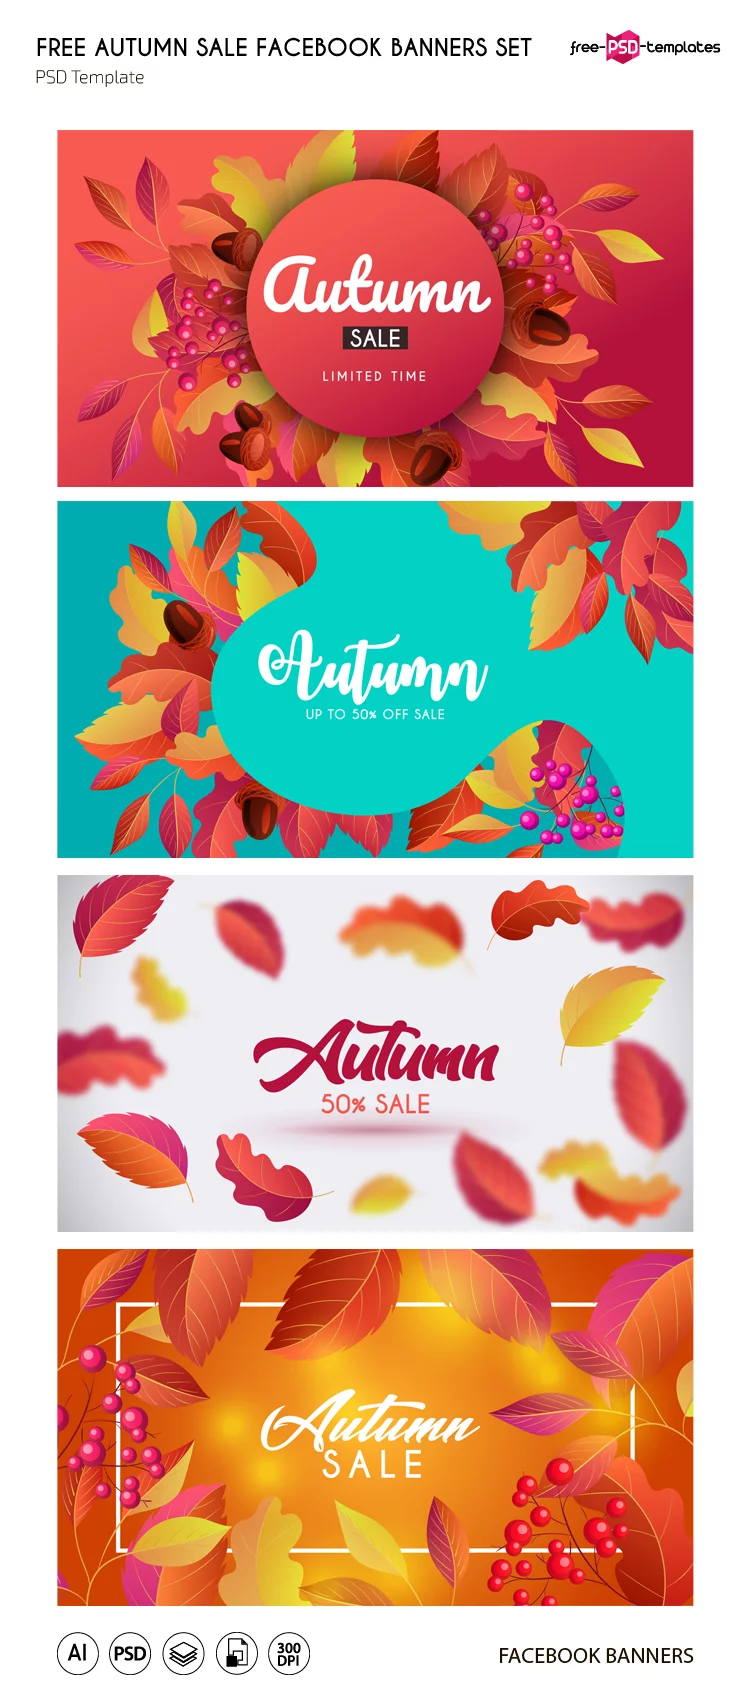 Free Autumn Sale Facebook Banners Set